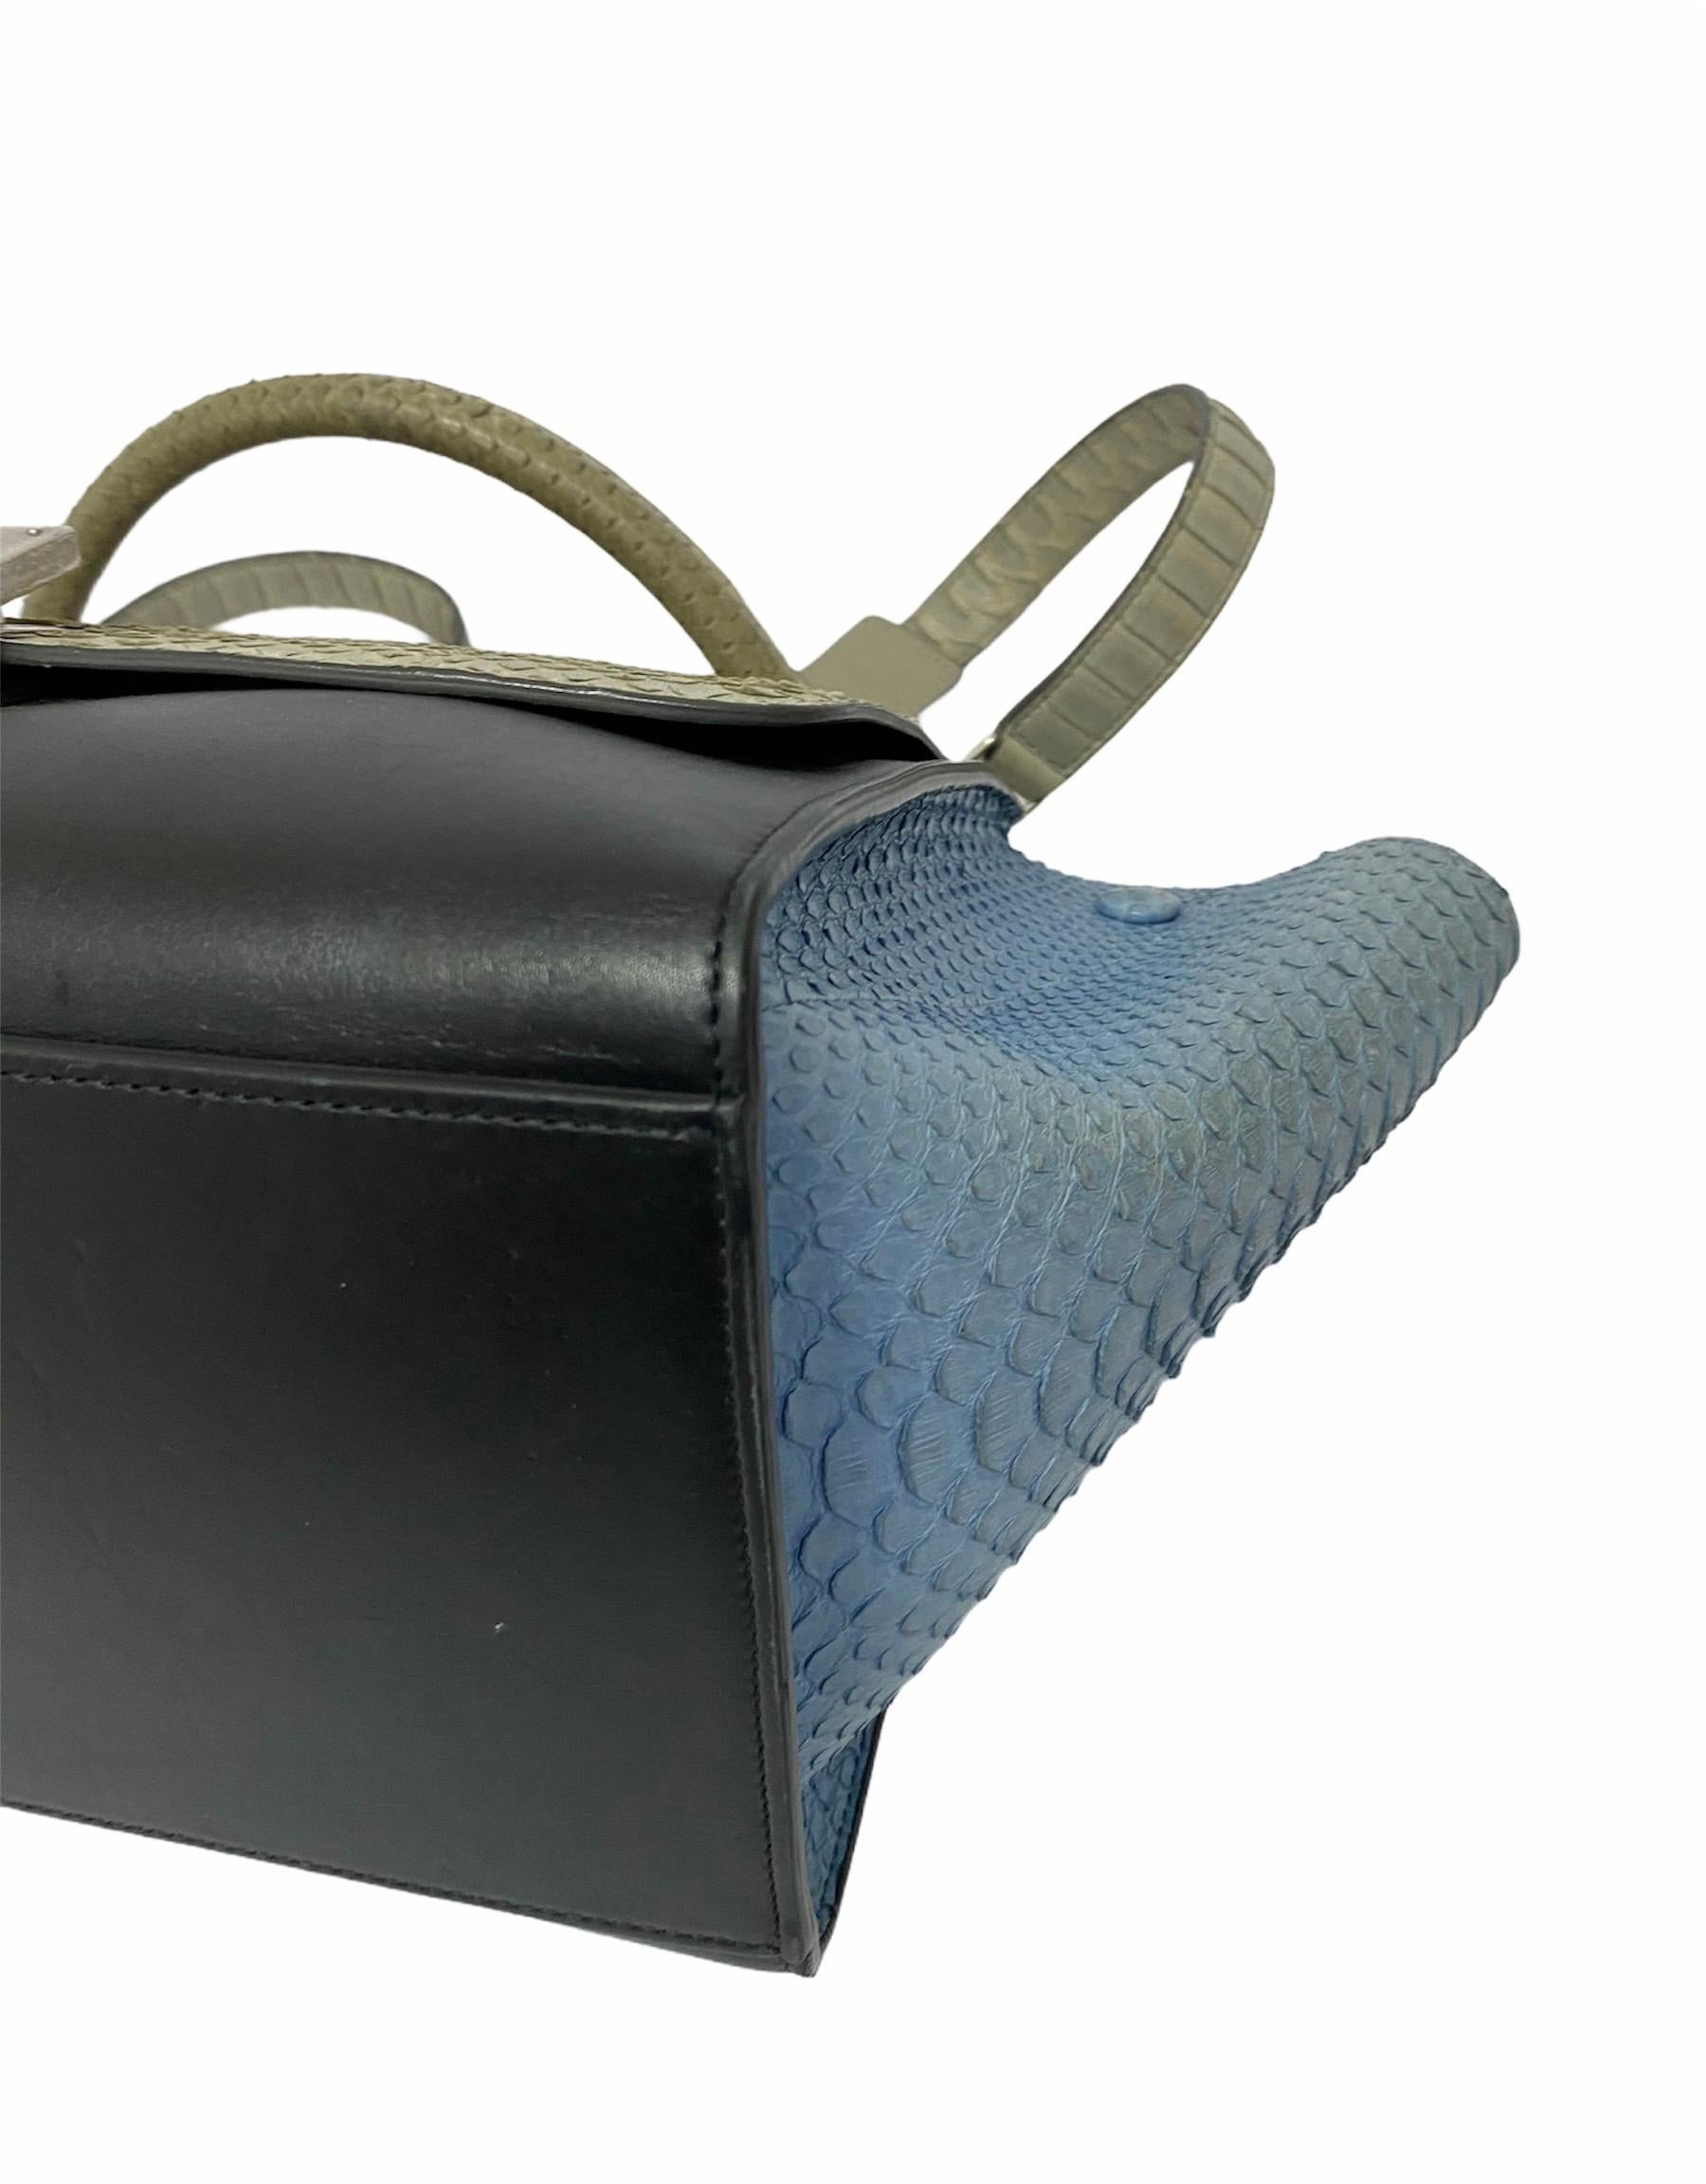 Celine Trapeze Python Handbag in Blue, Gray and Black Colors 1